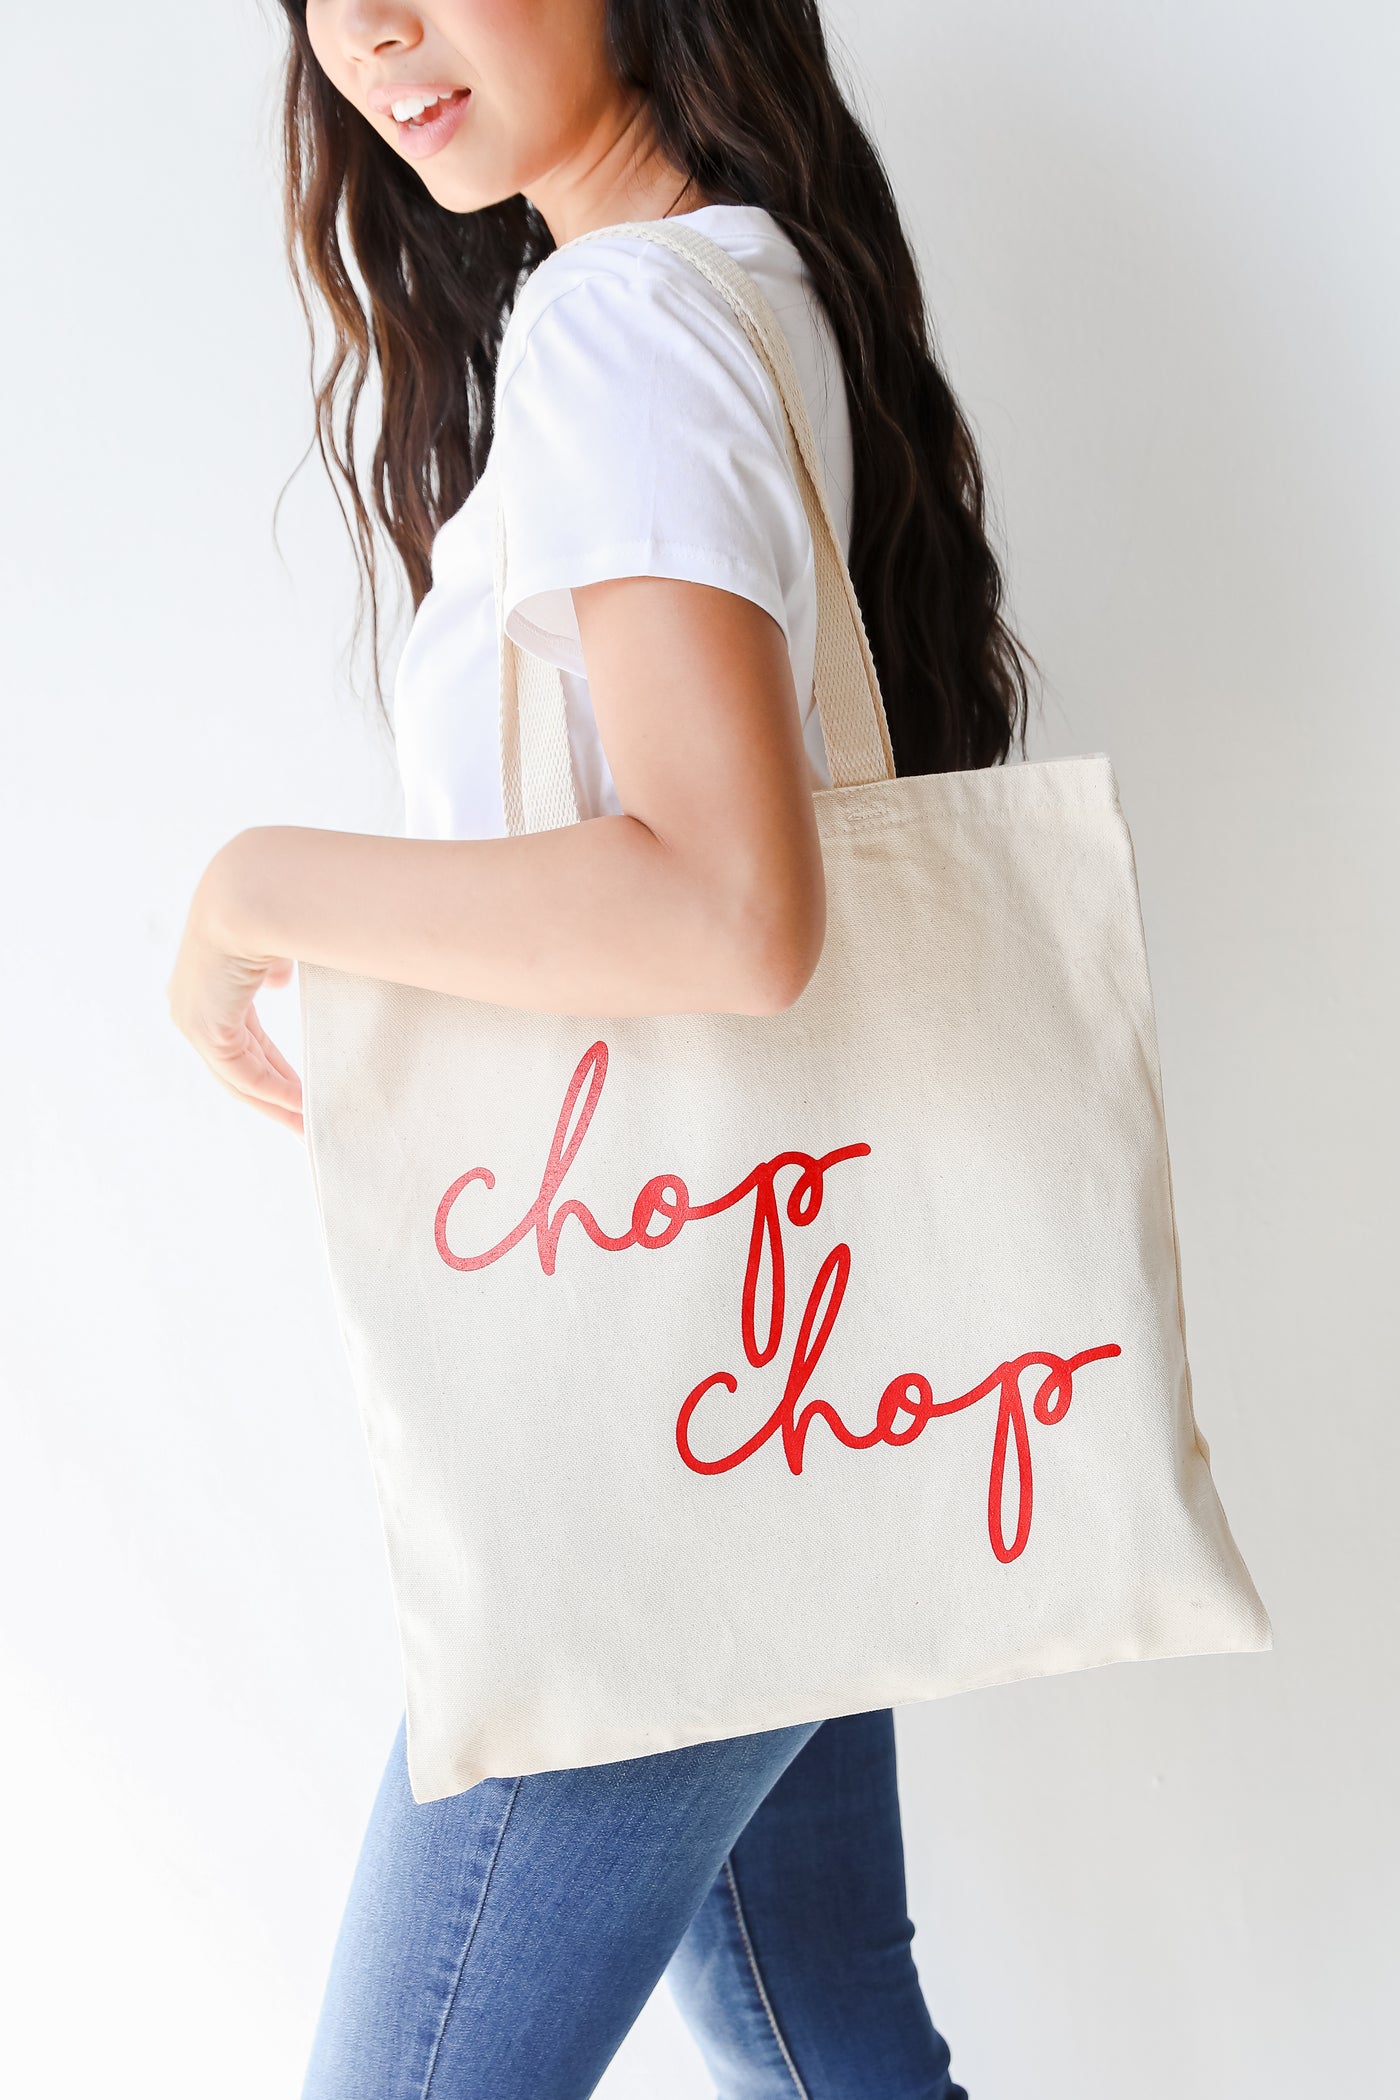 Chop Chop Tote Bag on model